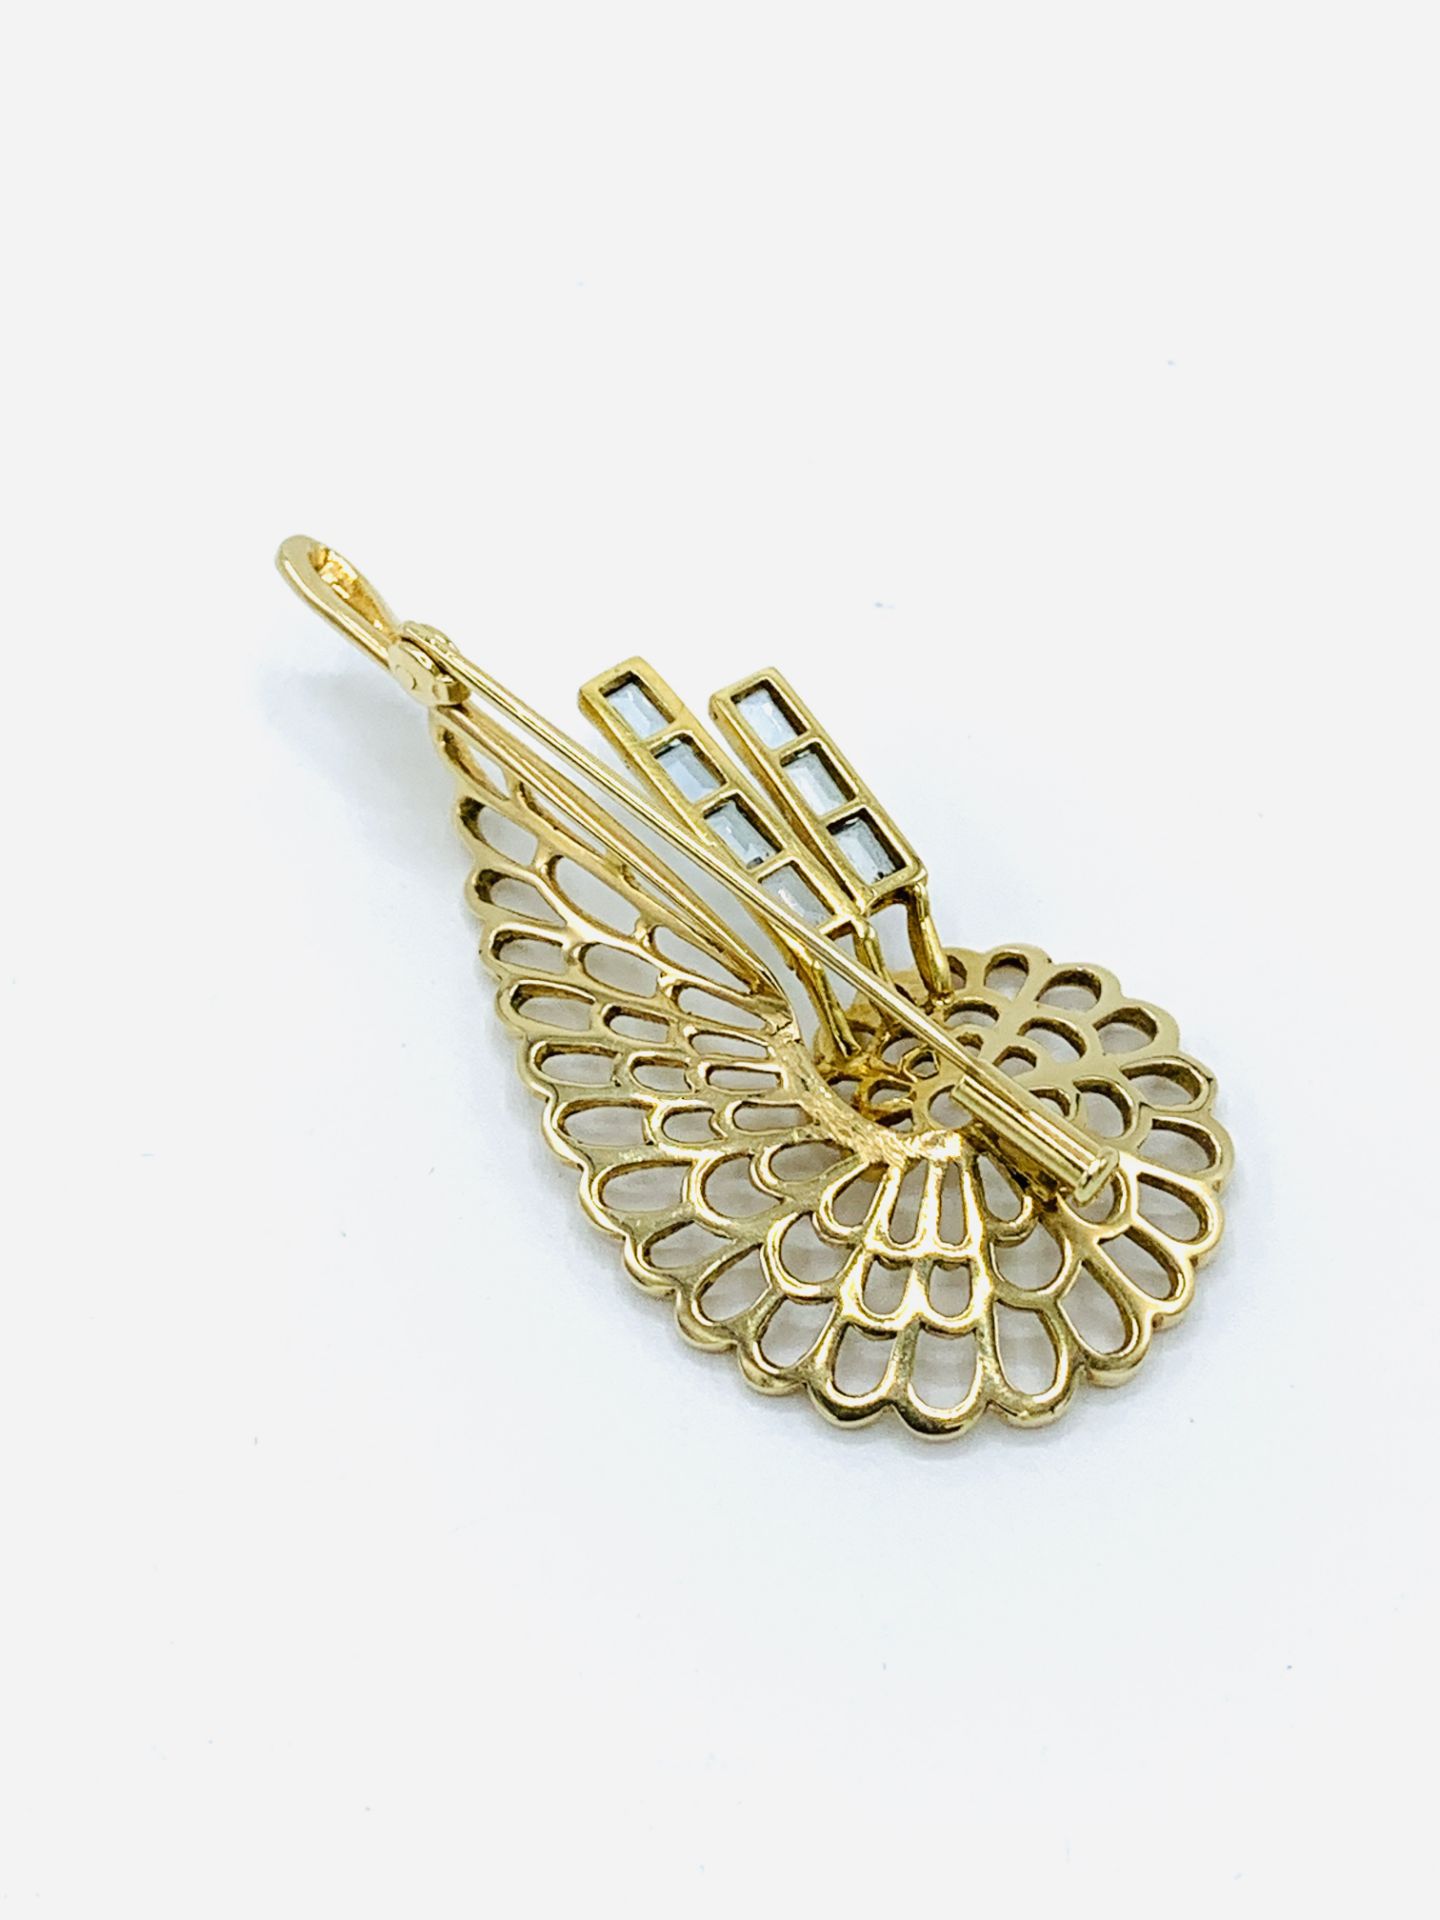 585 gold filigree brooch set with 7 aquamarines. - Image 4 of 6